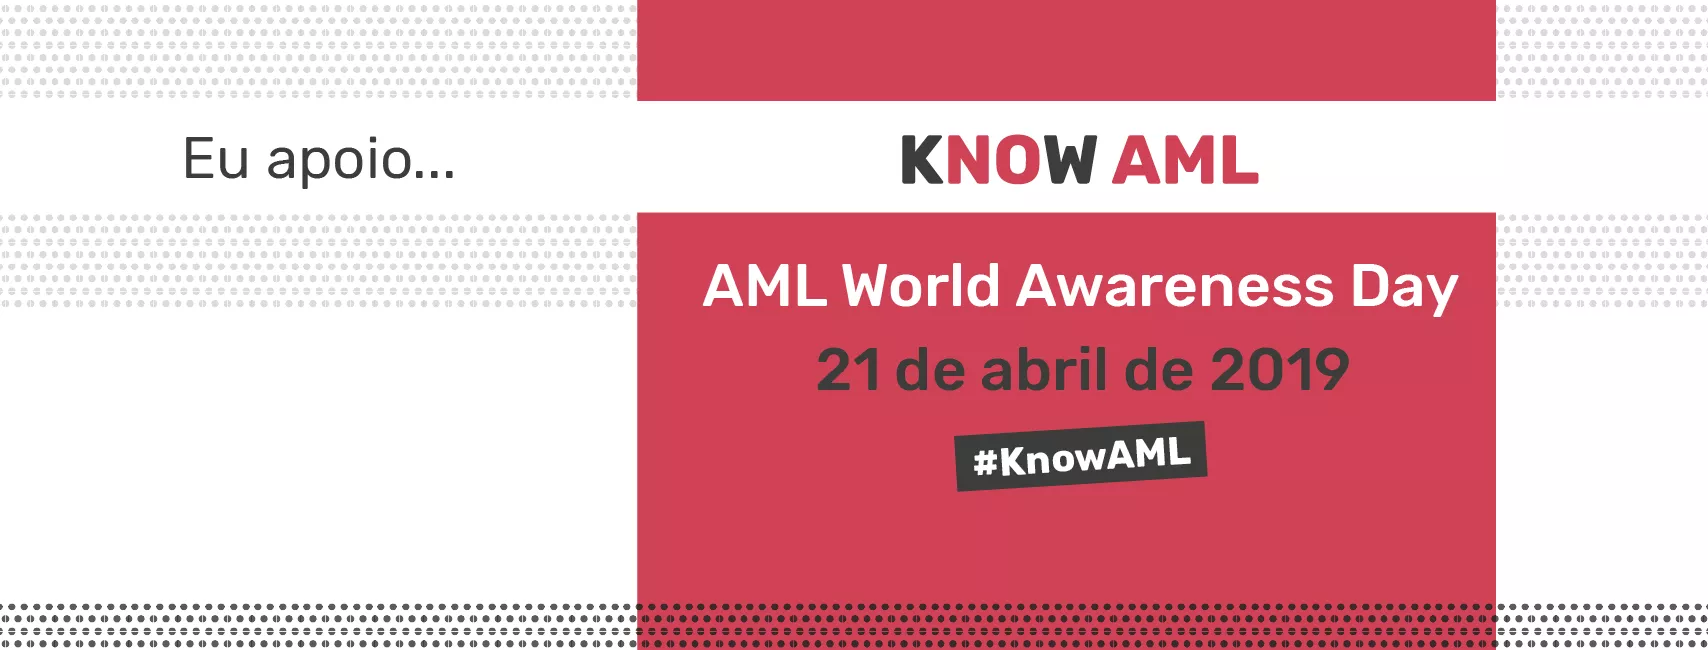 Campanha internacional #KnowAML apoia famílias afetadas por este cancro raro e agressivo